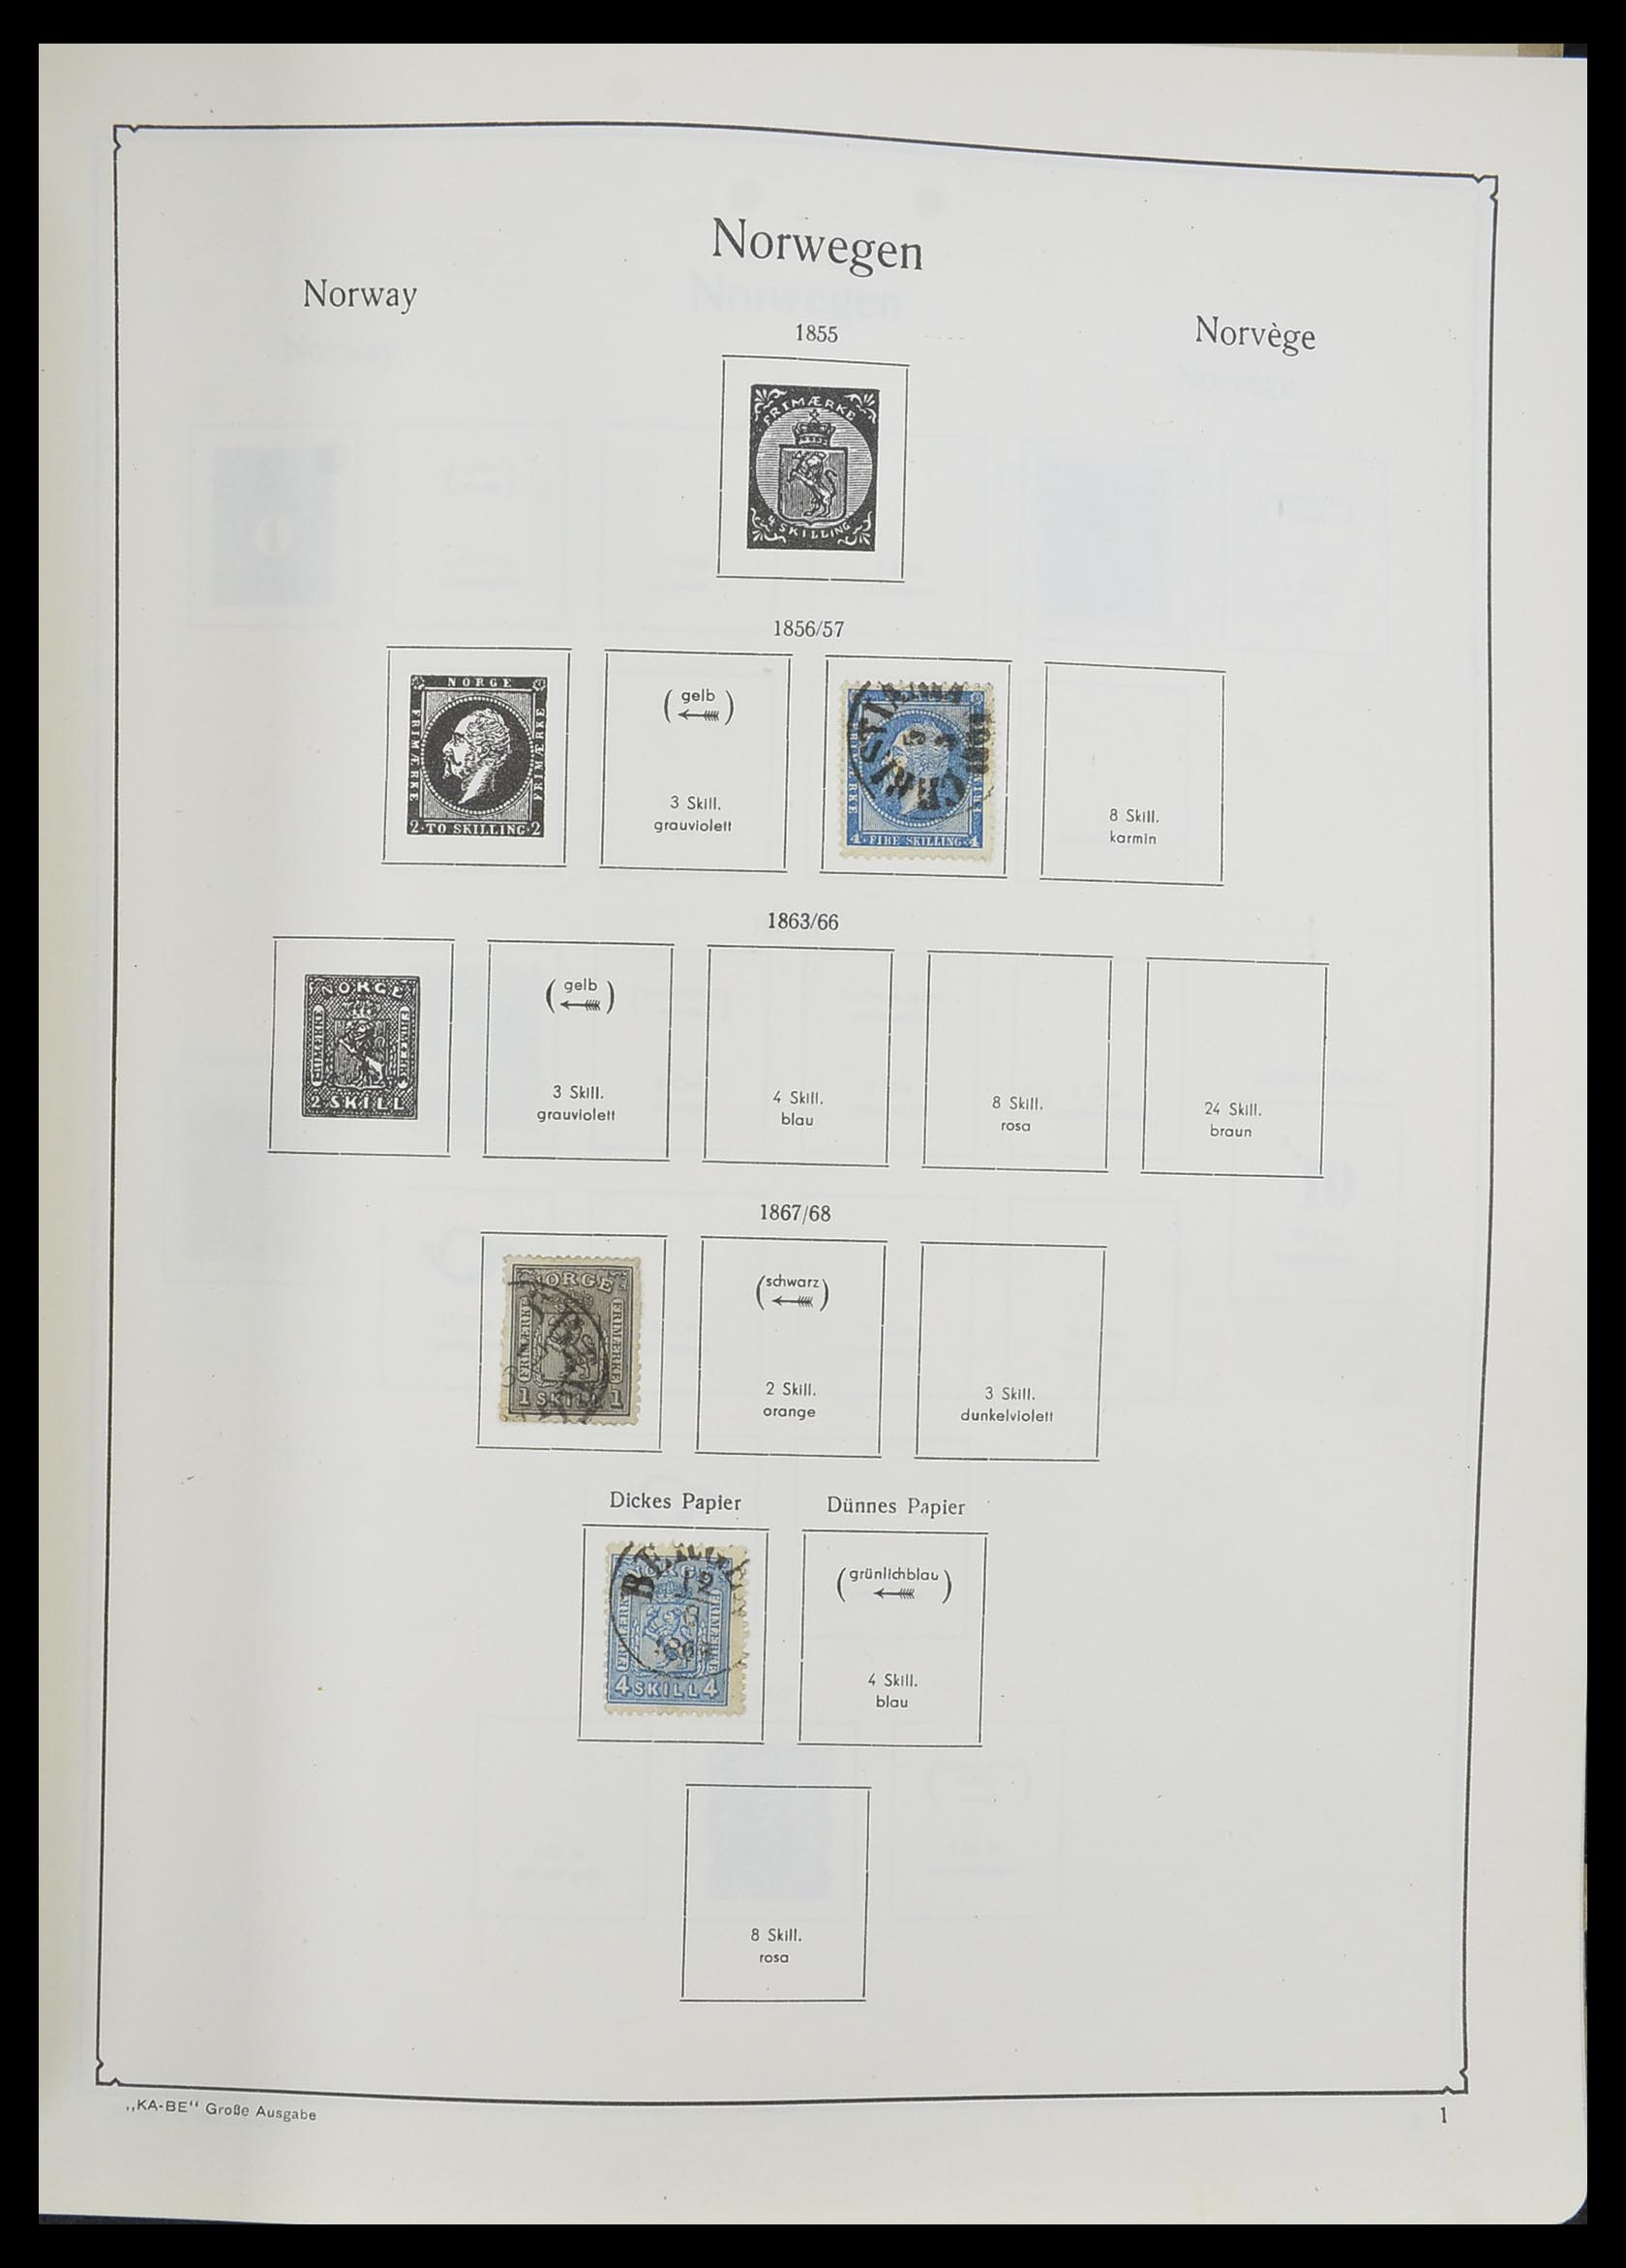 33379 099 - Stamp collection 33379 Scandinavia 1856-1972.